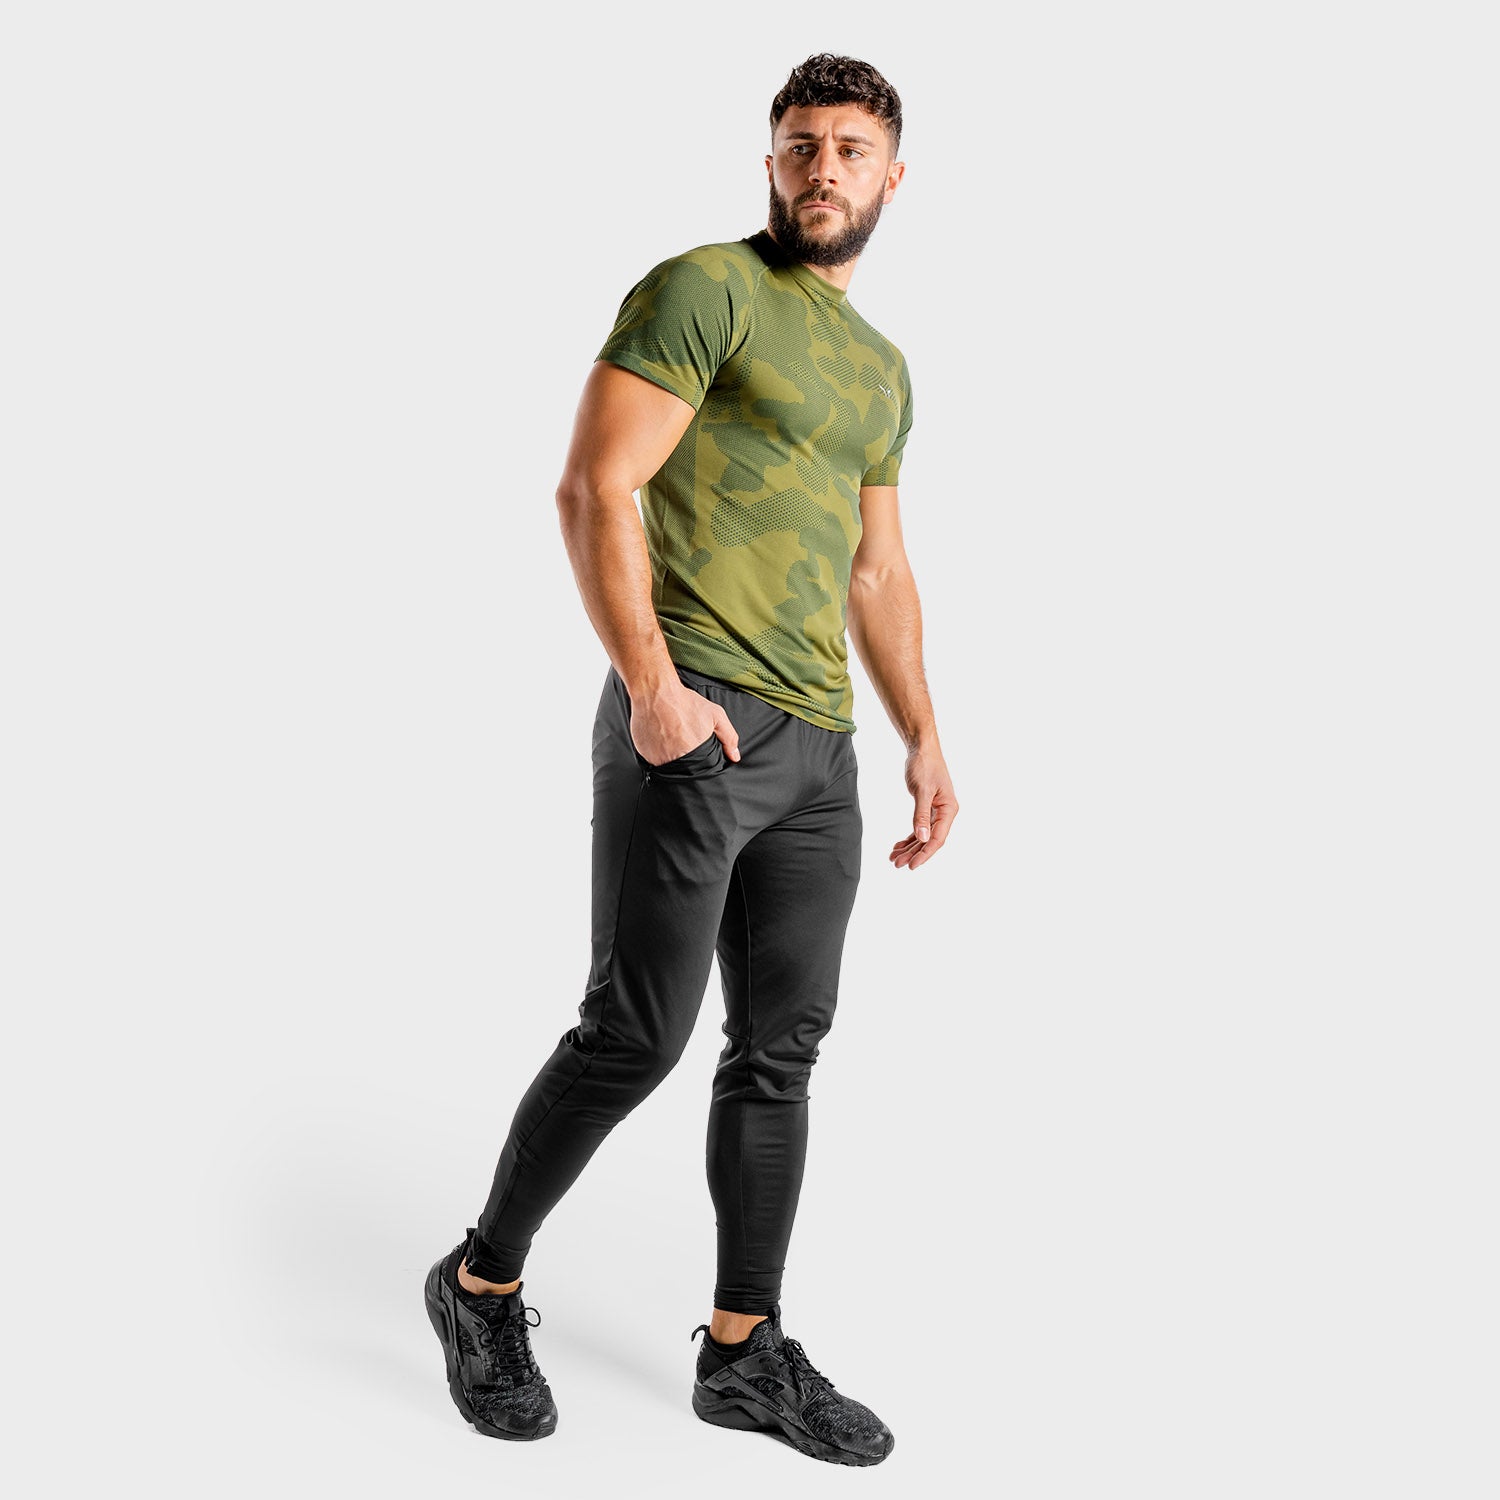 squatwolf-workout-shirts-for-men-wolf-seamless-workout-tee-khaki-gym-wear